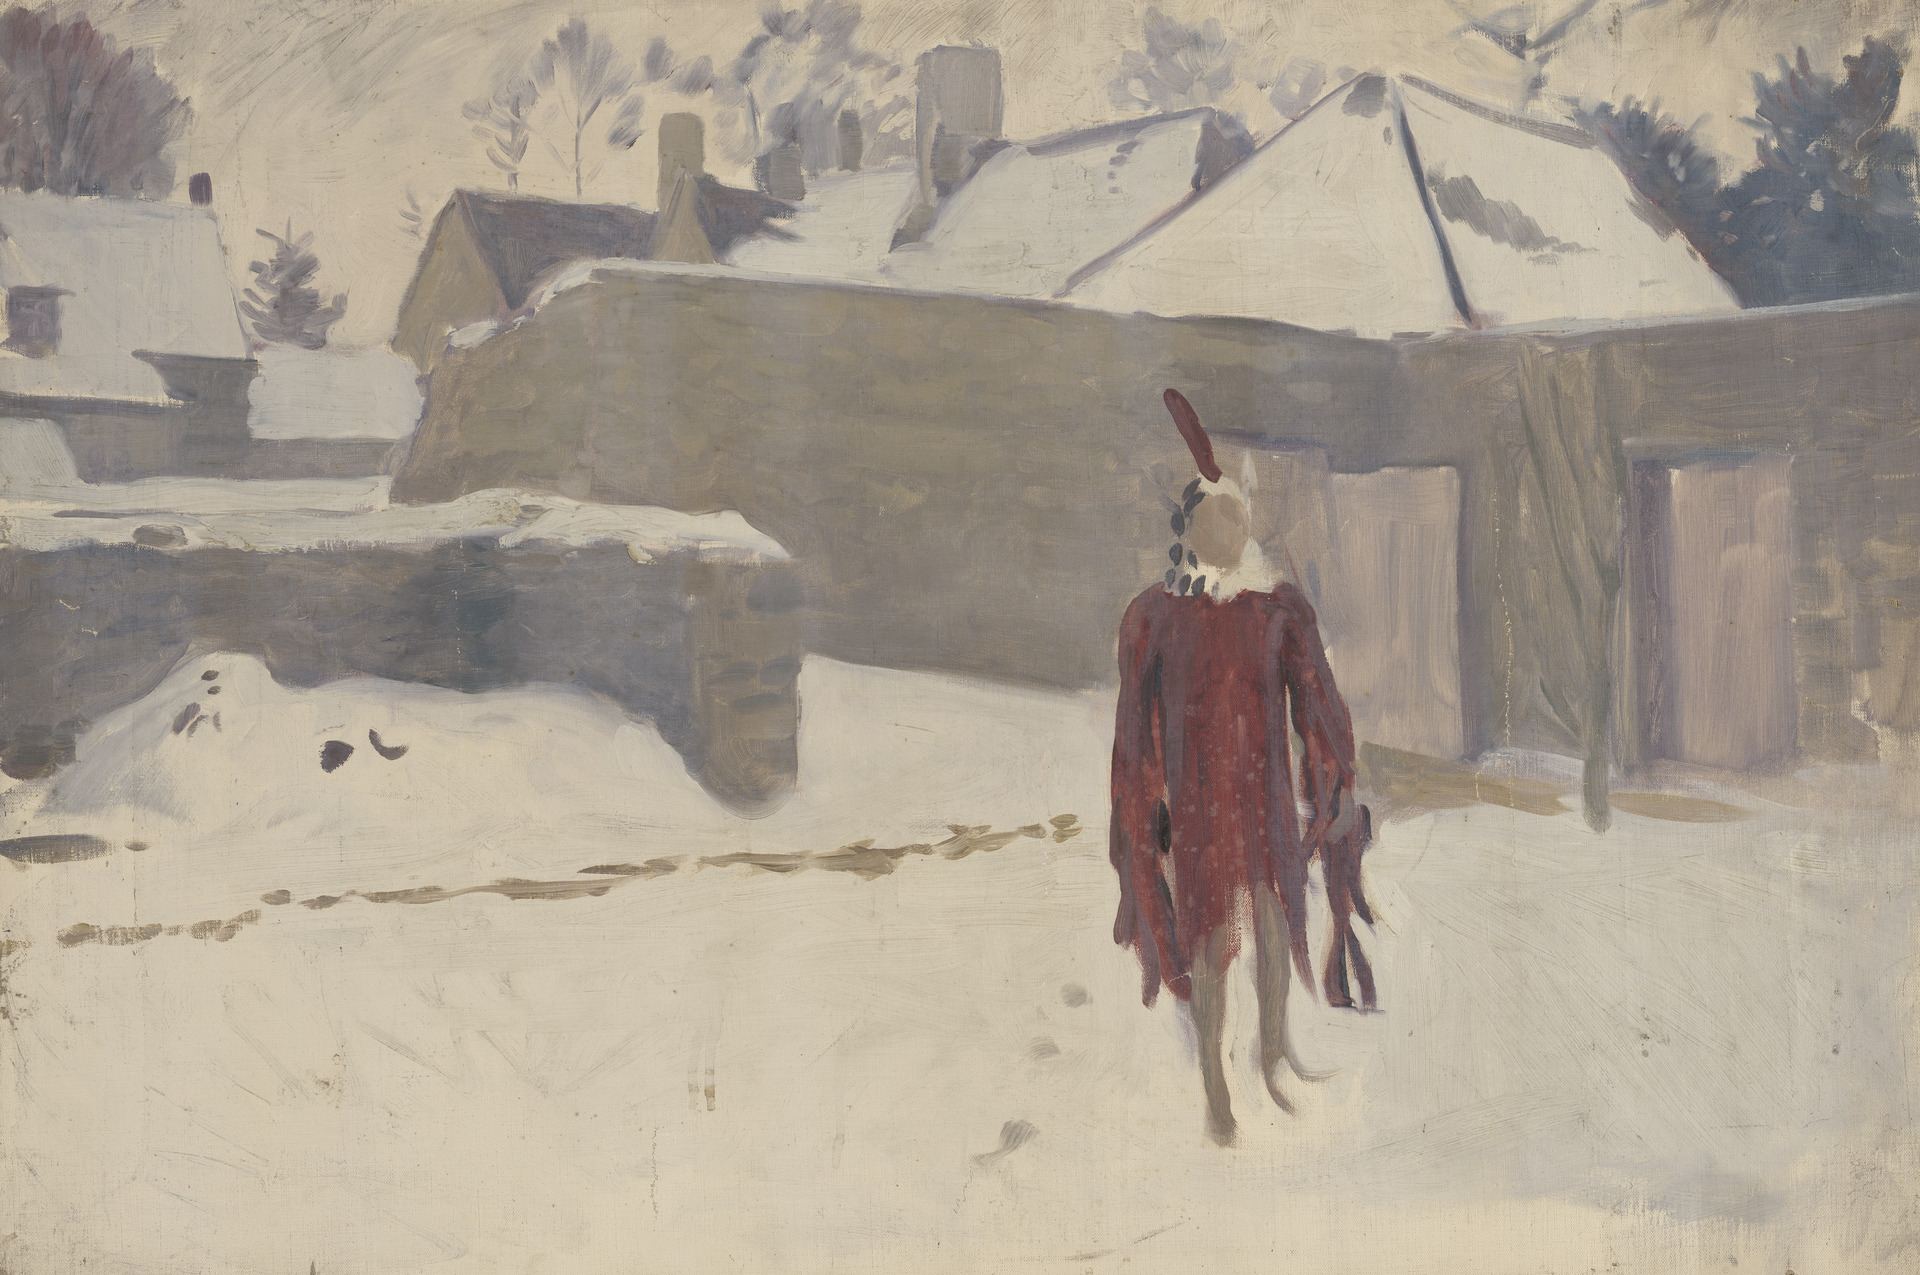 Mannikin im Schnee by John Singer Sargent - ca. 1891–93 - 63.5 x 76.2 cm Yale University Art Gallery